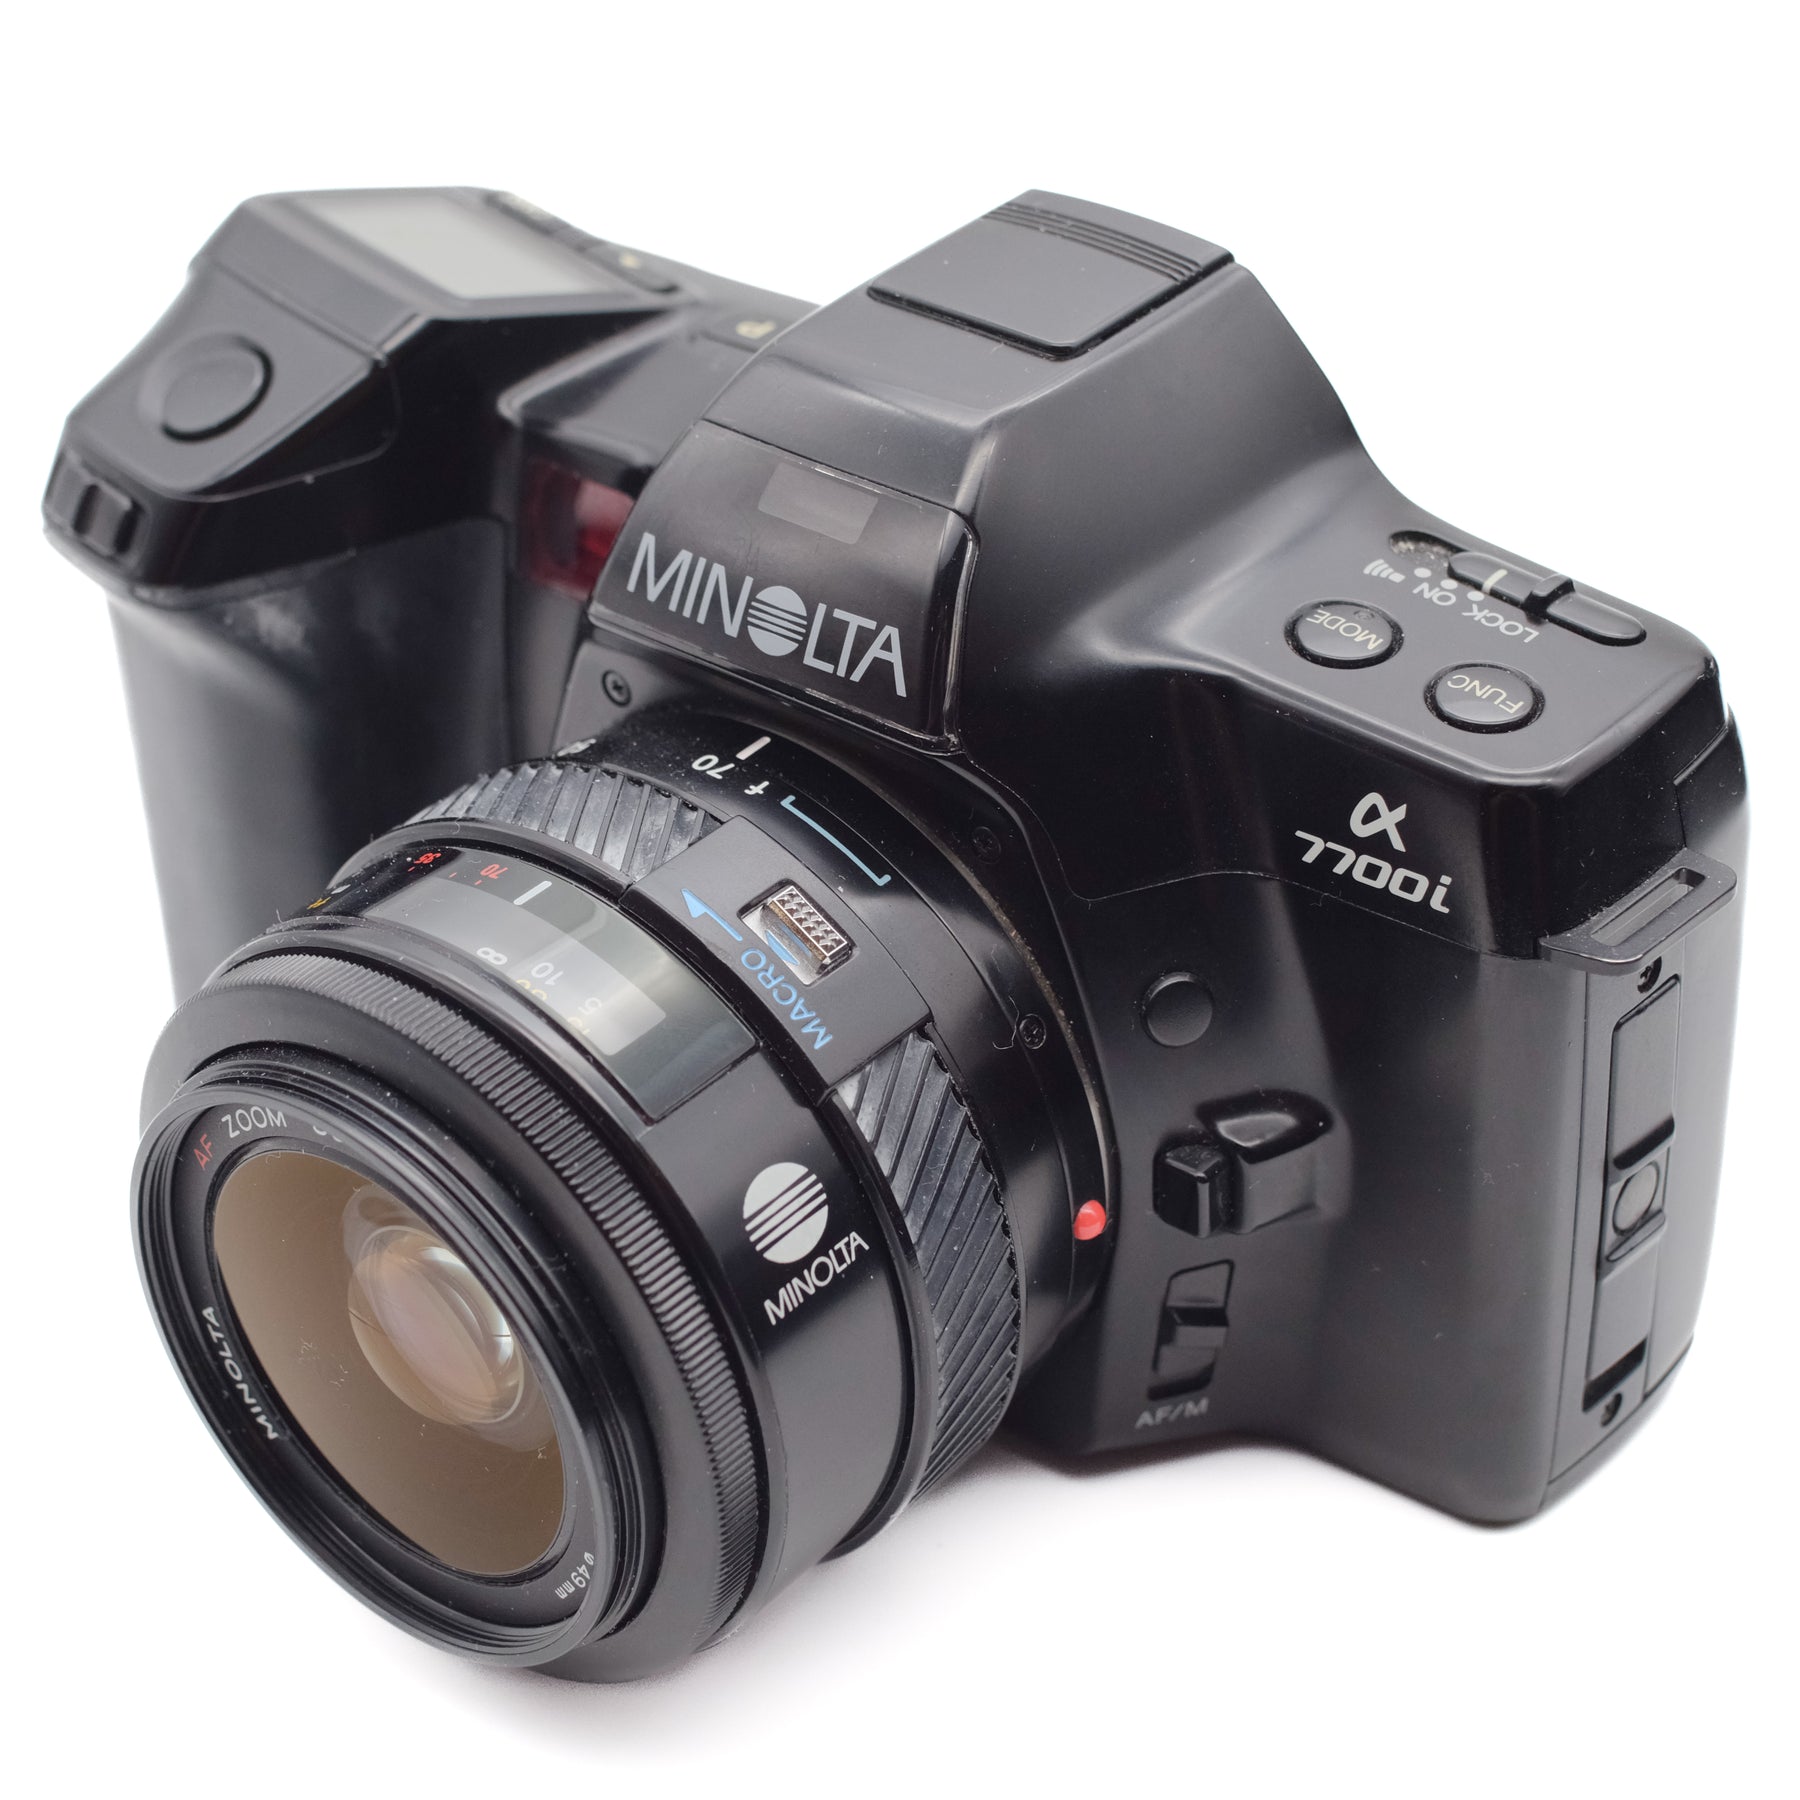 Minolta α-7700i 35mm SLR Camera Set (Minolta AF 35 - 70mm f/4